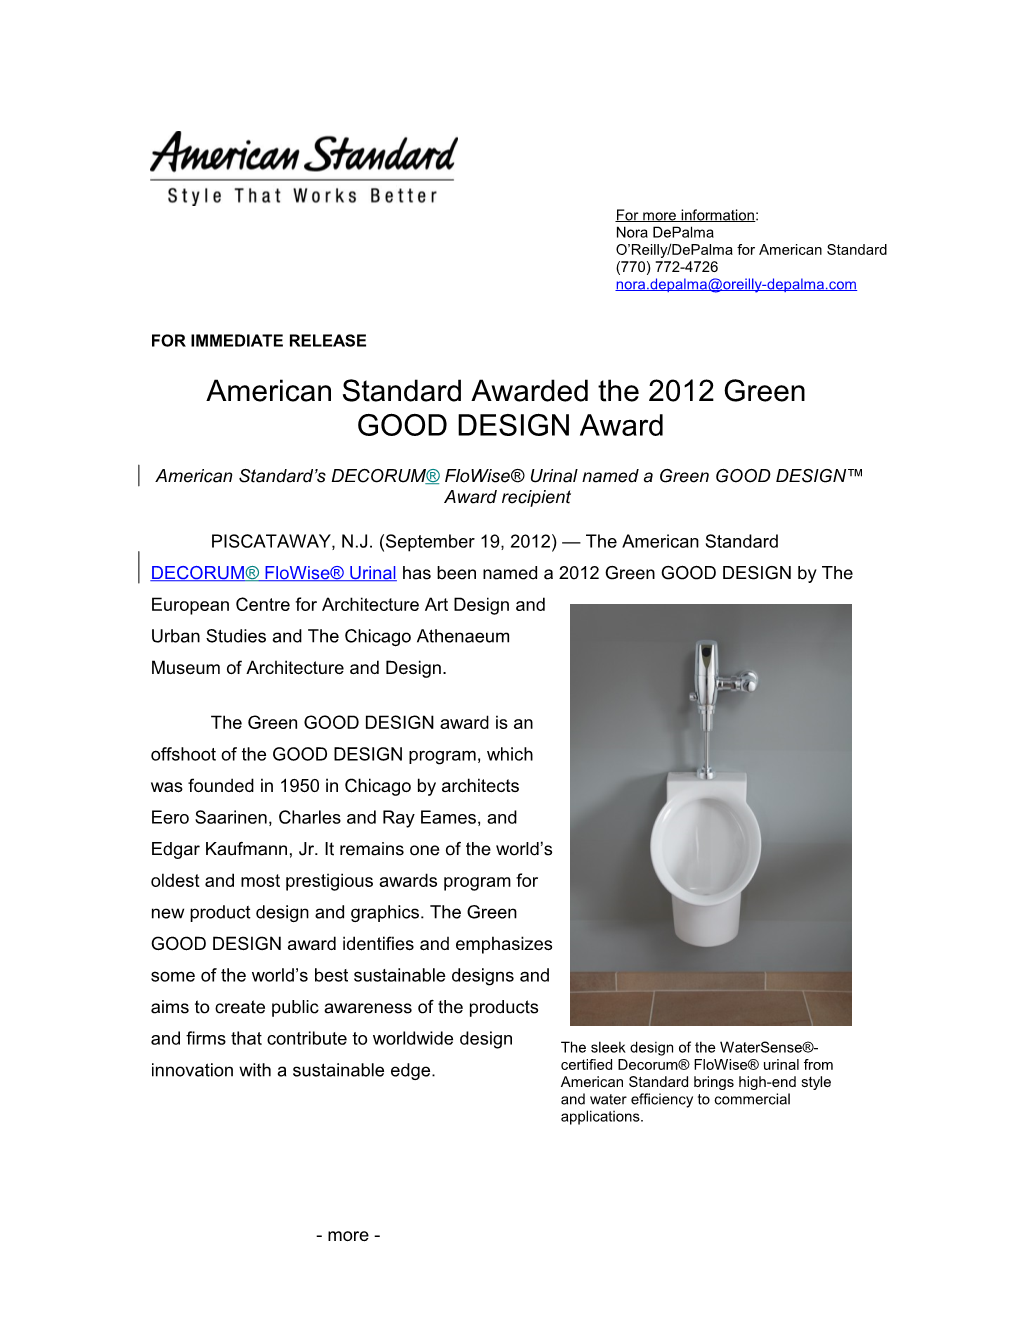 American Standard Awarded the 2012 Green GOOD DESIGN Award 1-1-1